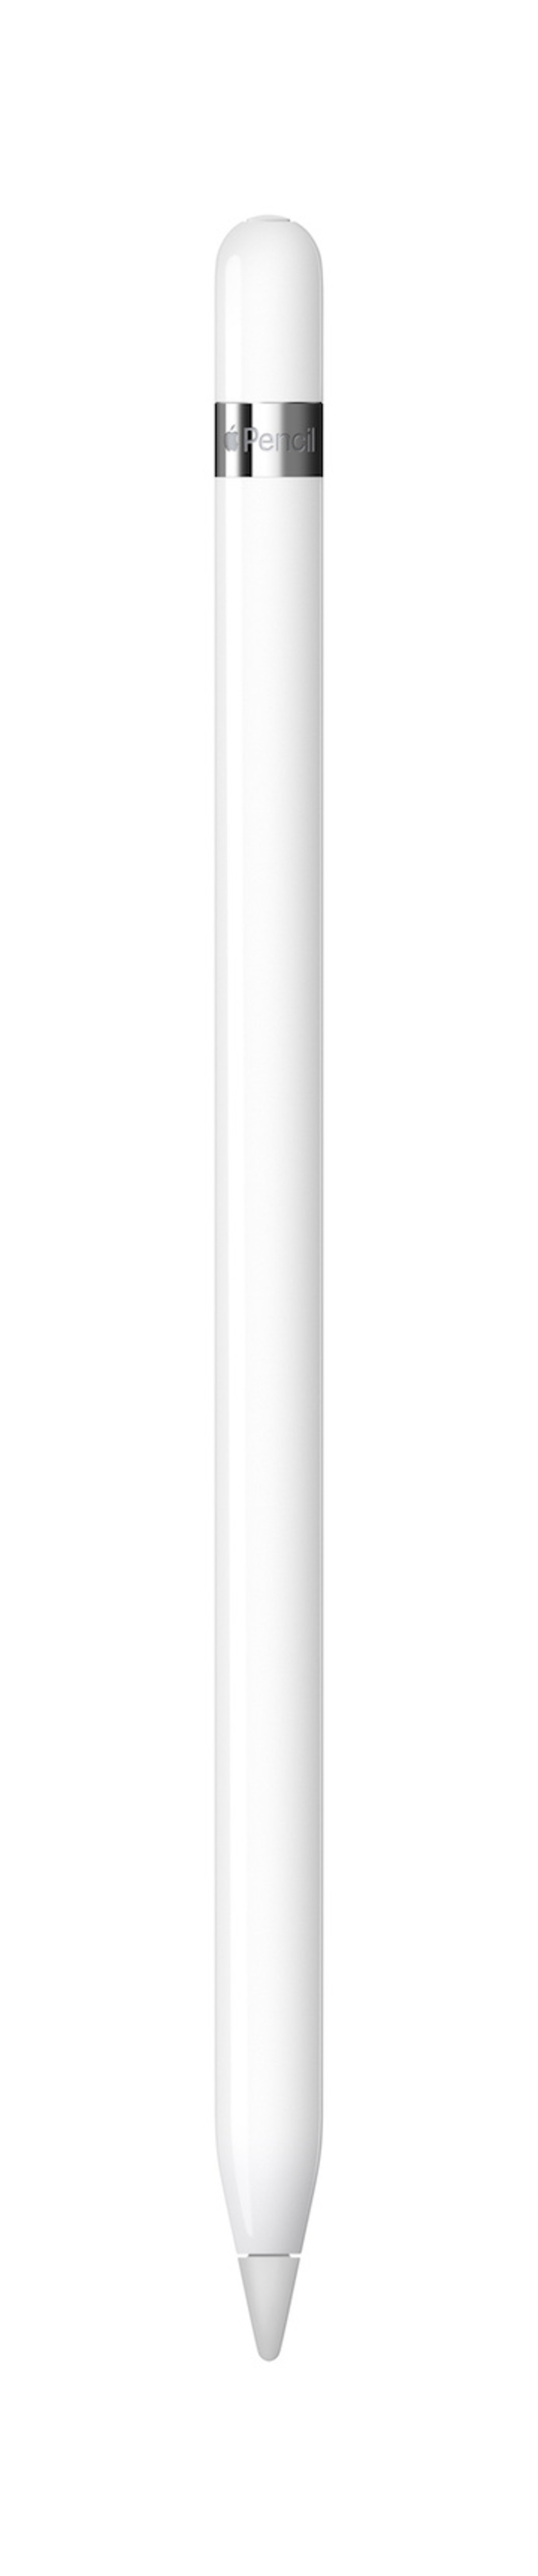 Apple Pencil (1st Generation) - Techmart Apple Store